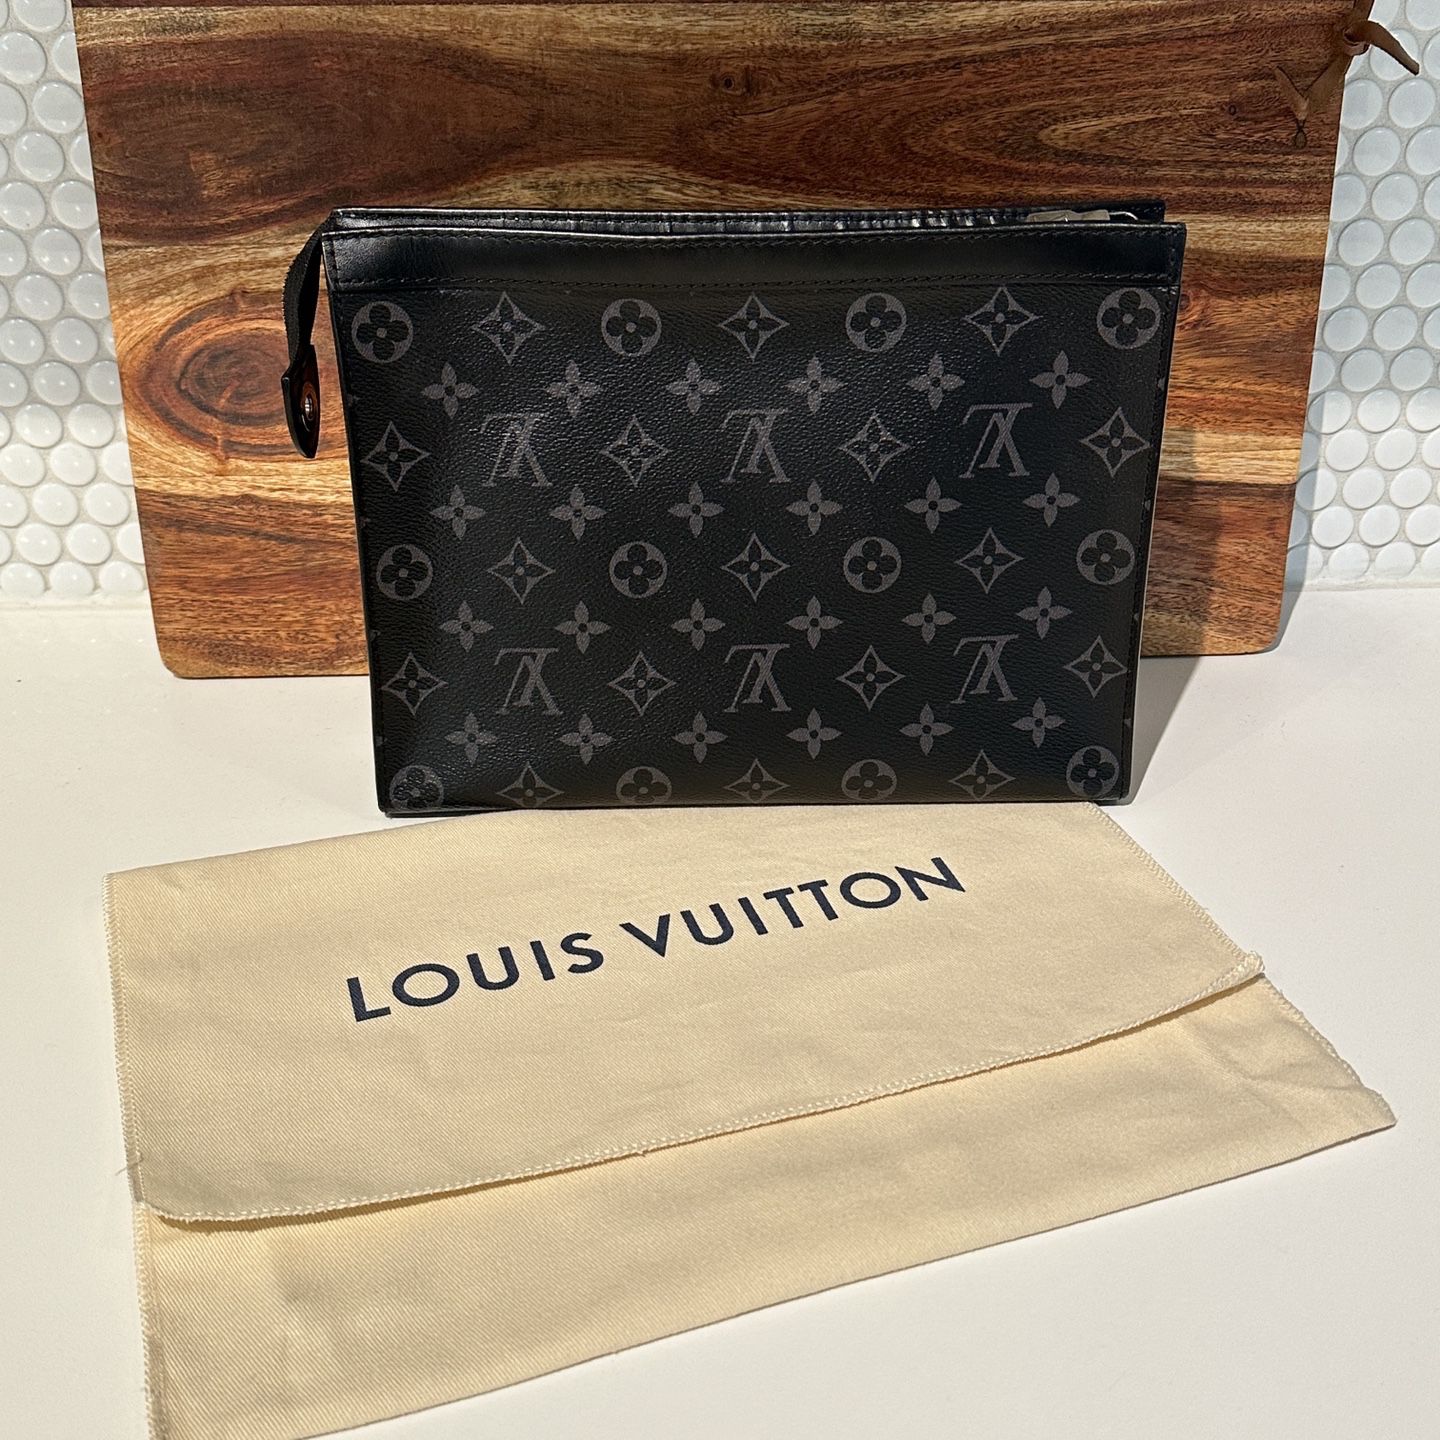 Louis Vuitton, Pochette Voyage MM for Sale in Queen Creek, AZ - OfferUp